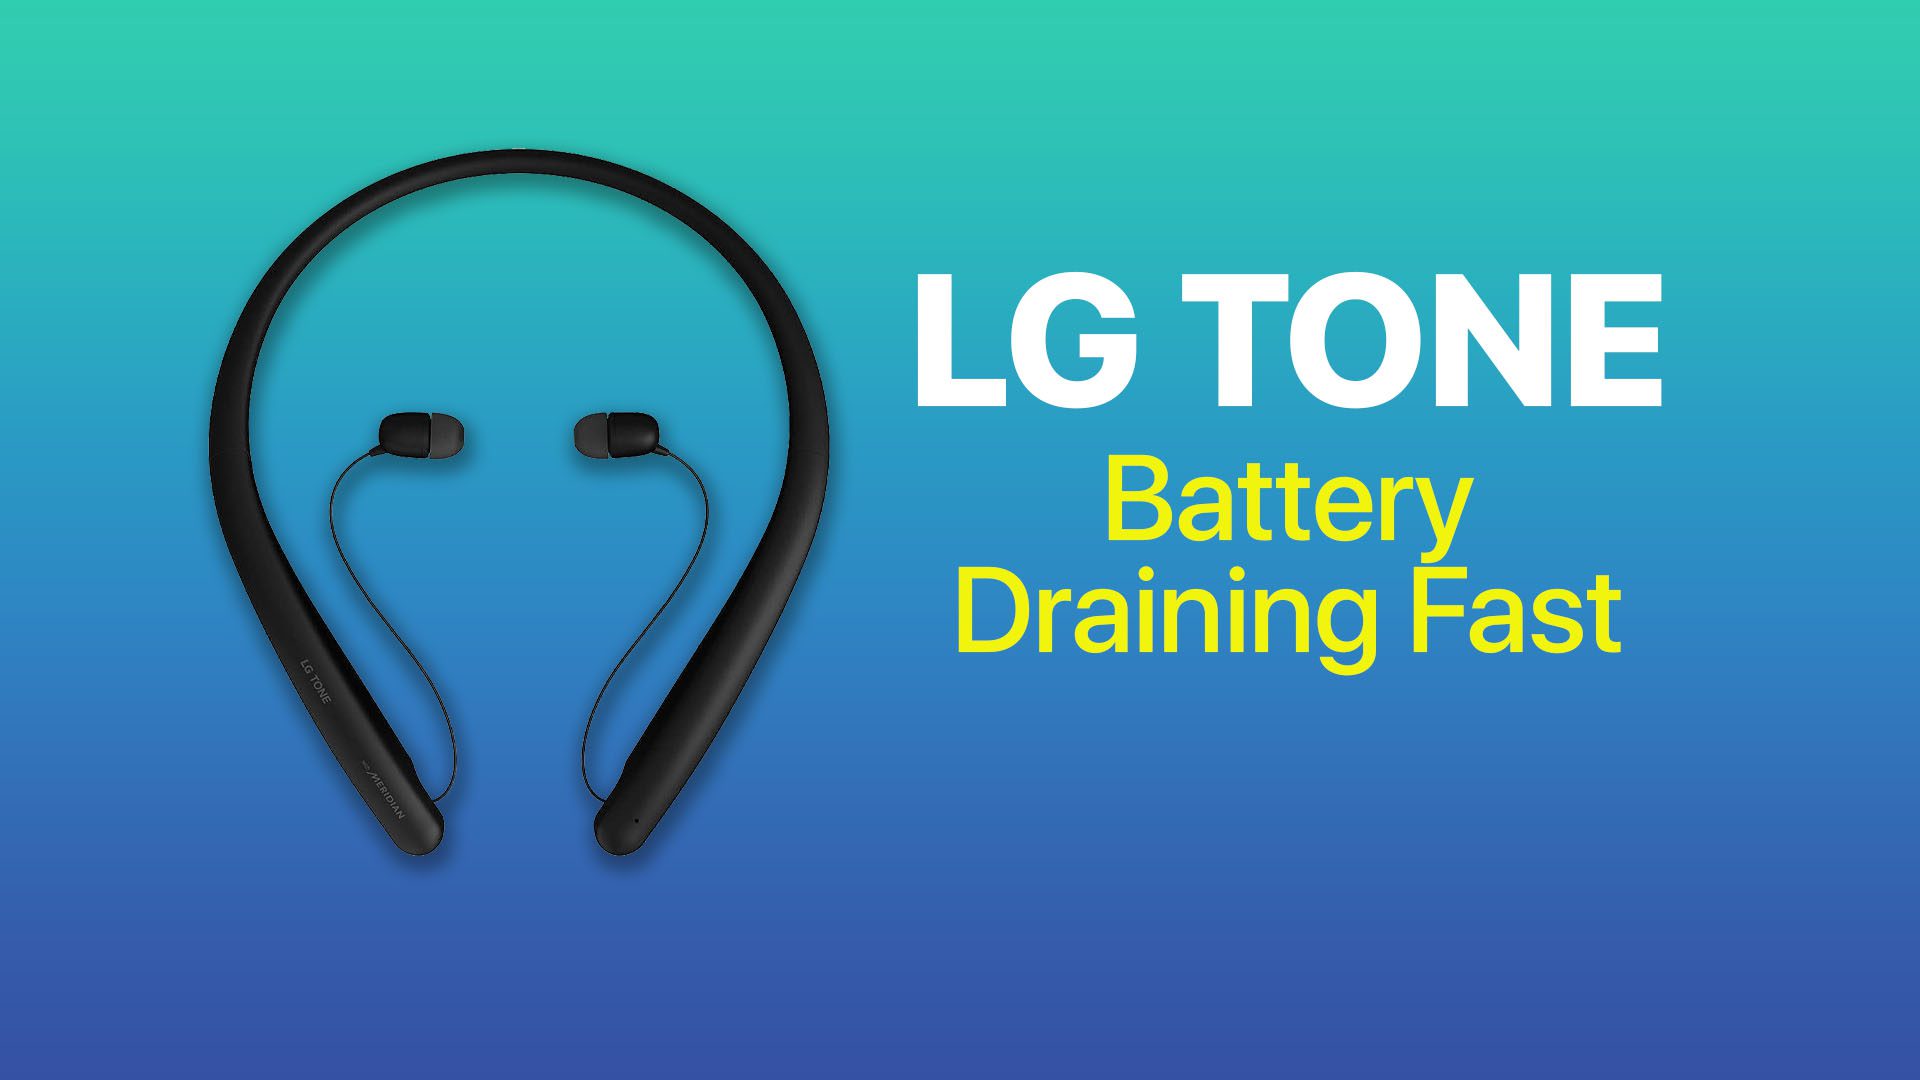 LG TONE Style HBS SL5 Battery Draining Fast